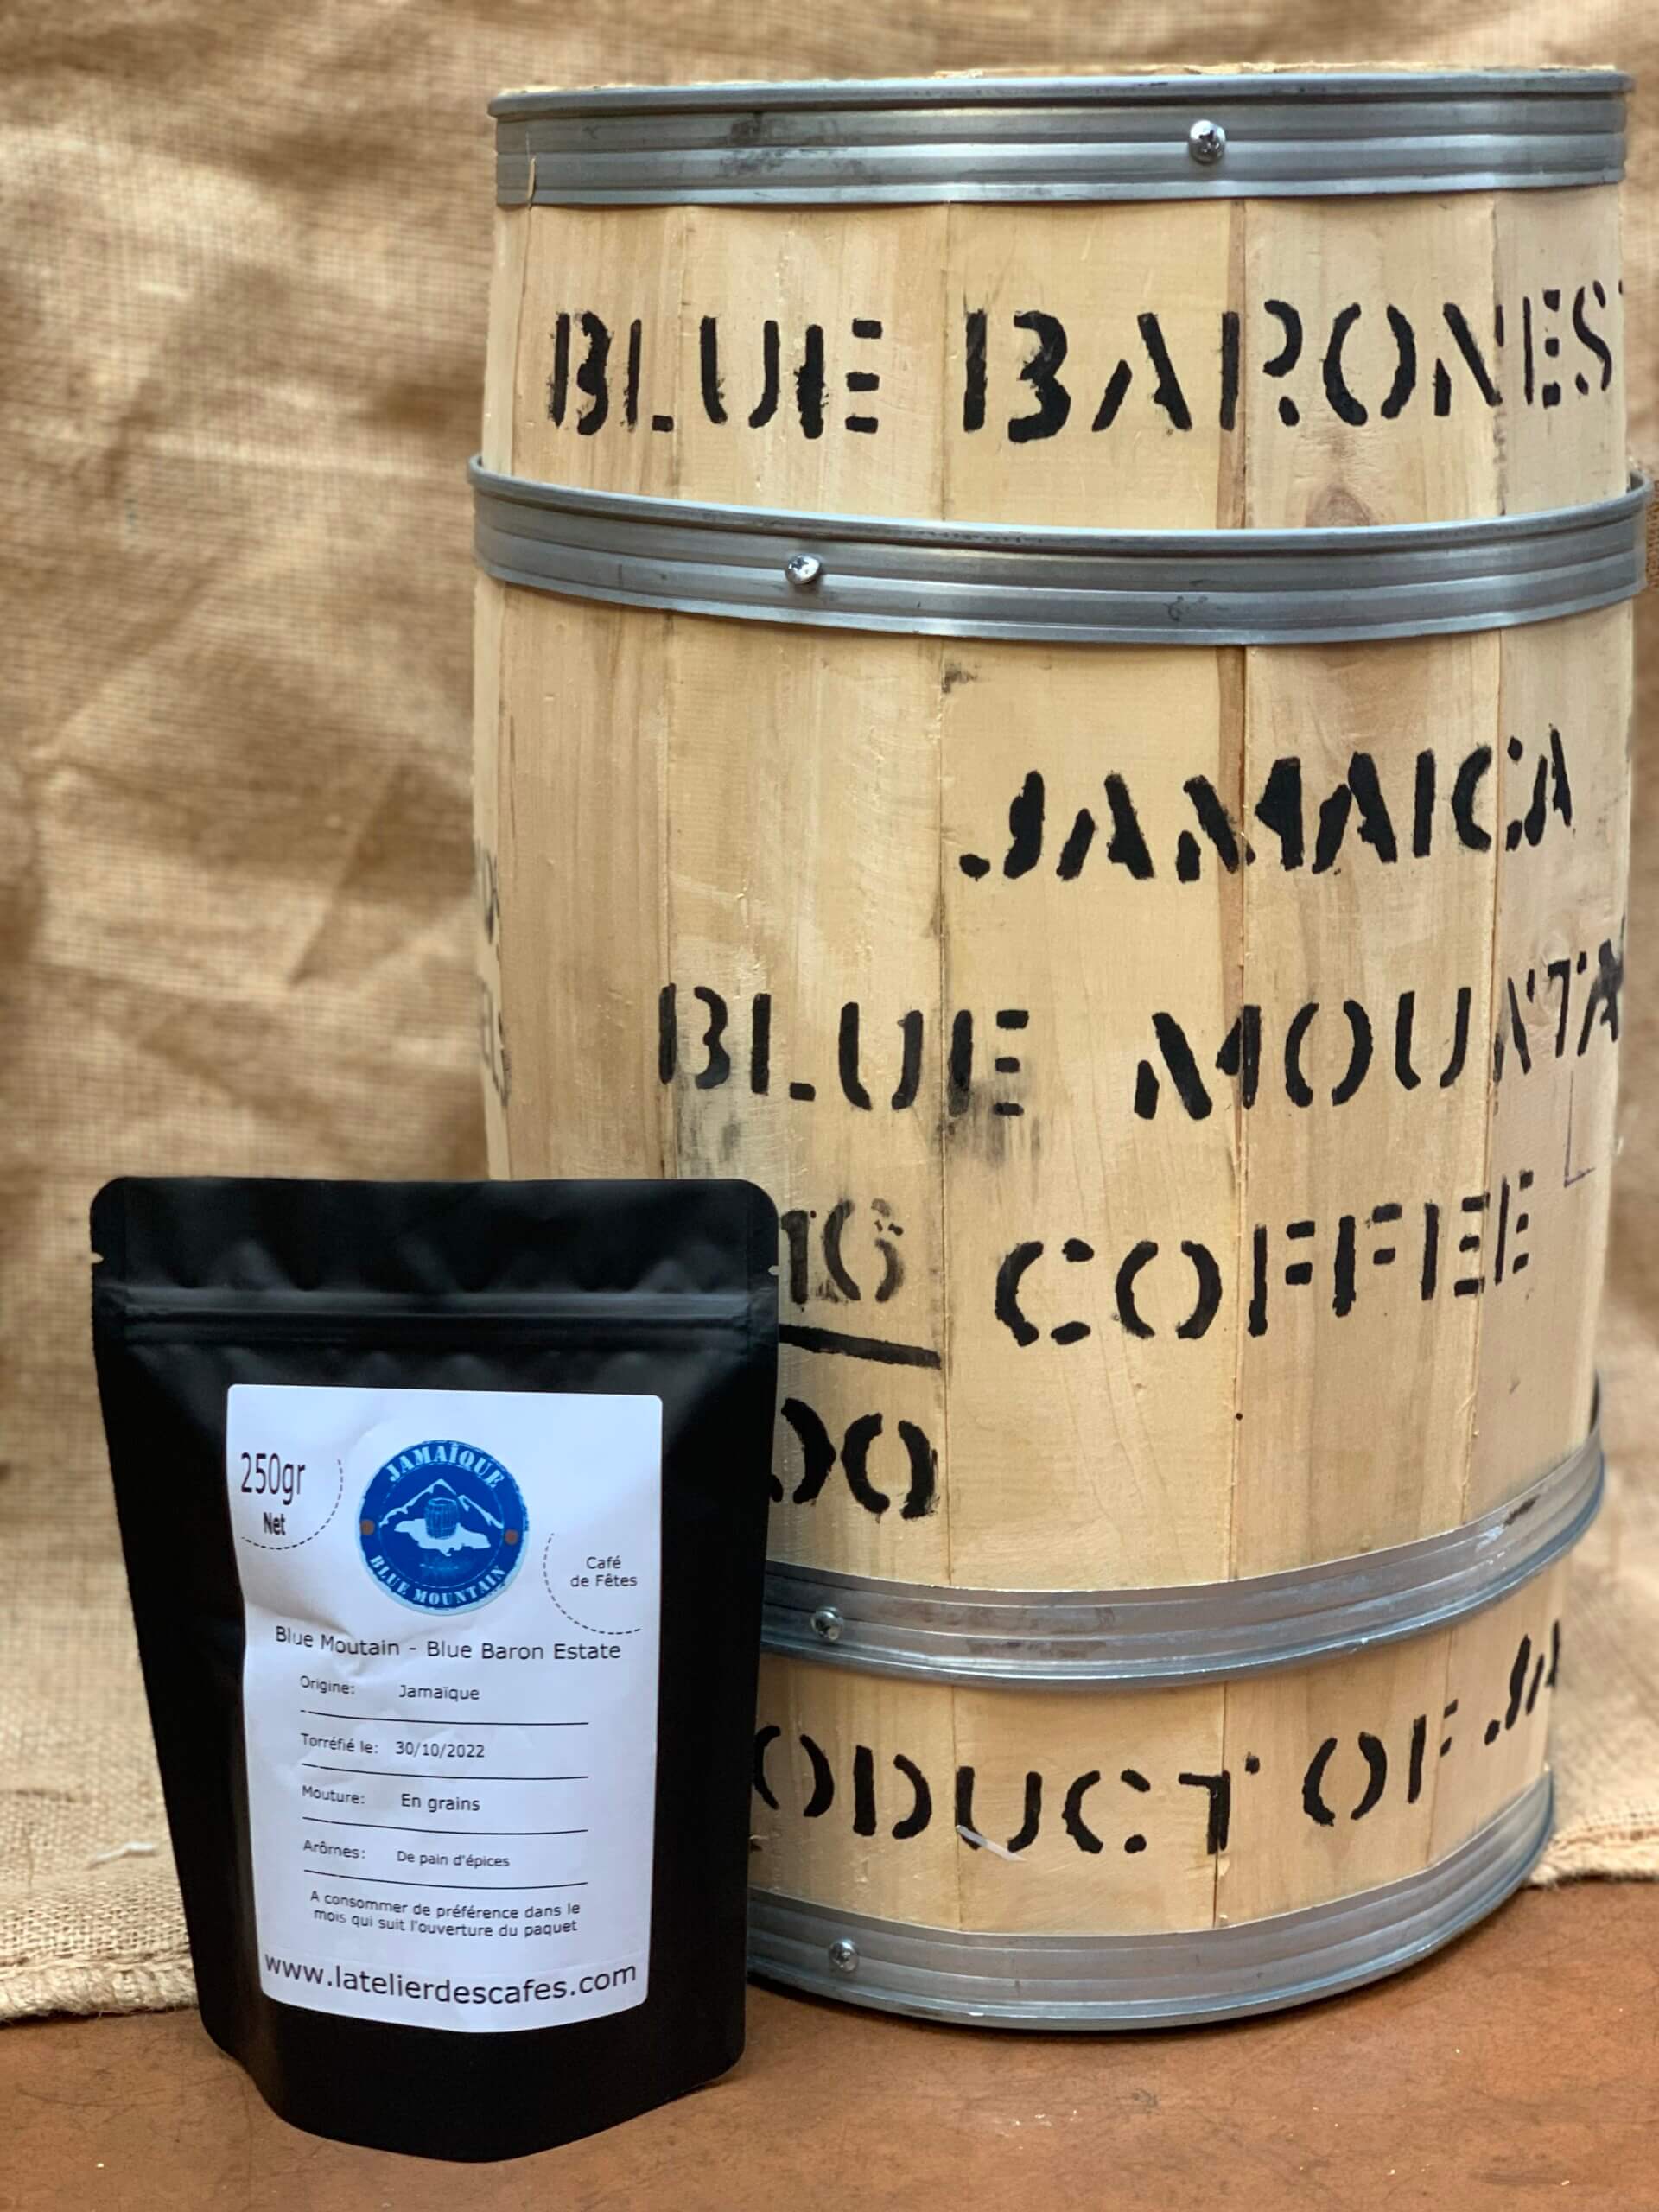 Café Blue Mountain de Jamaïque - Blue Baron Estate - 250g